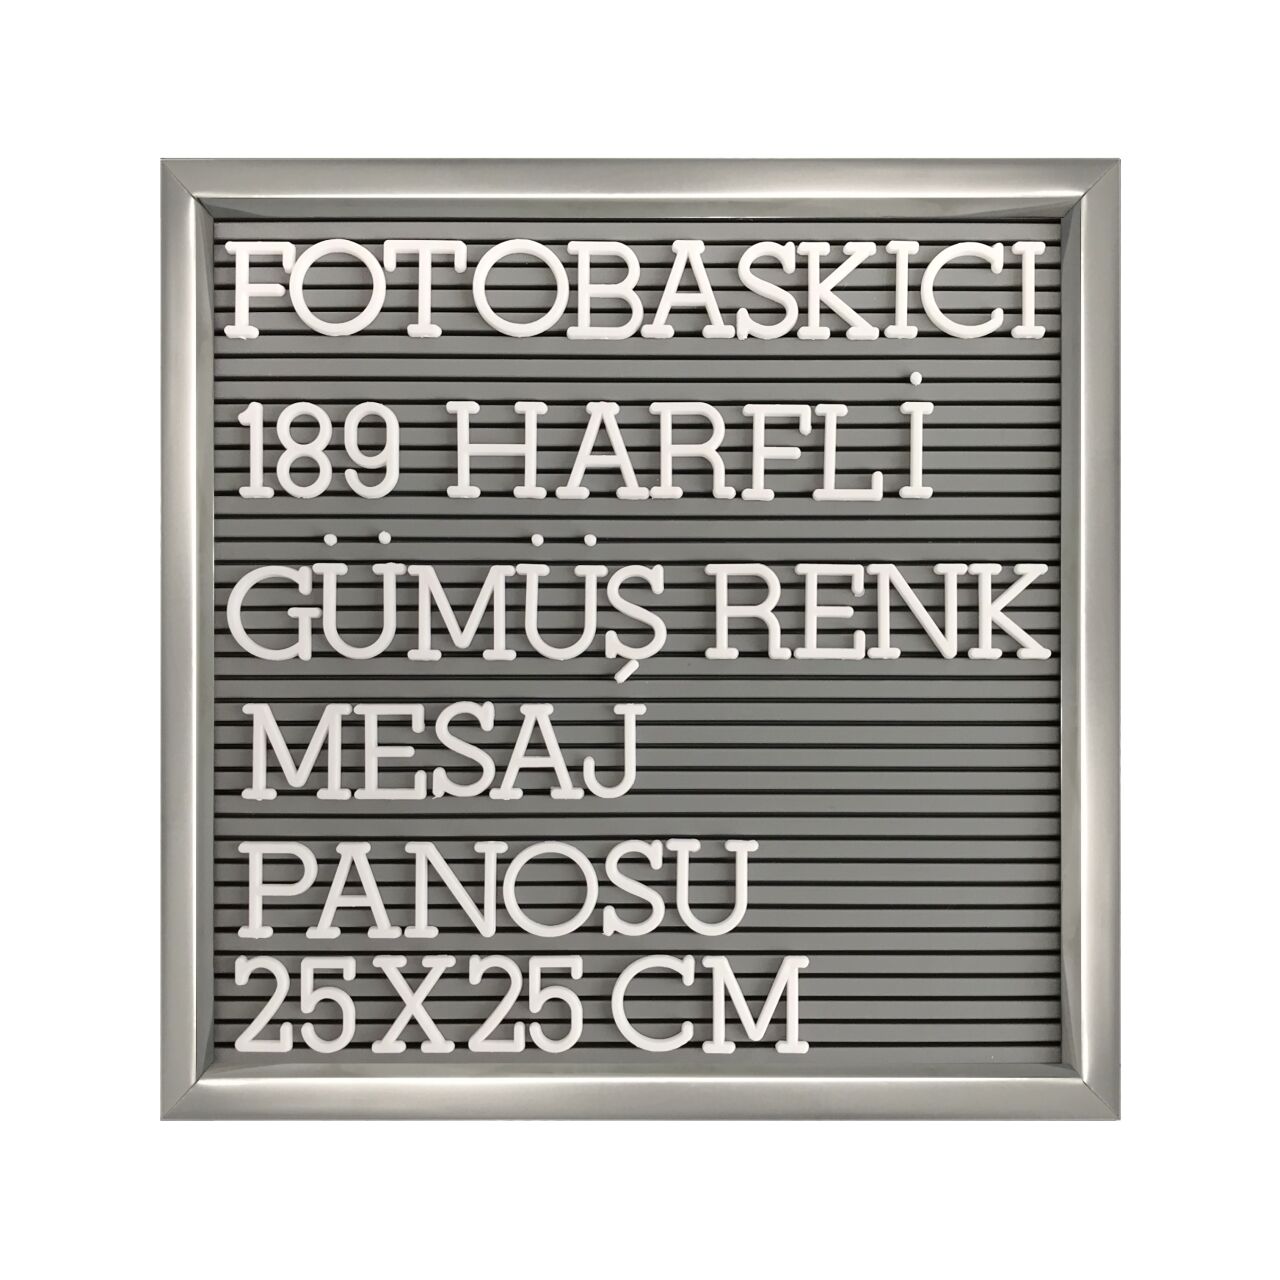 189 Harfli Gümüş Renk Mesaj Yazı Panosu 25x25 cm